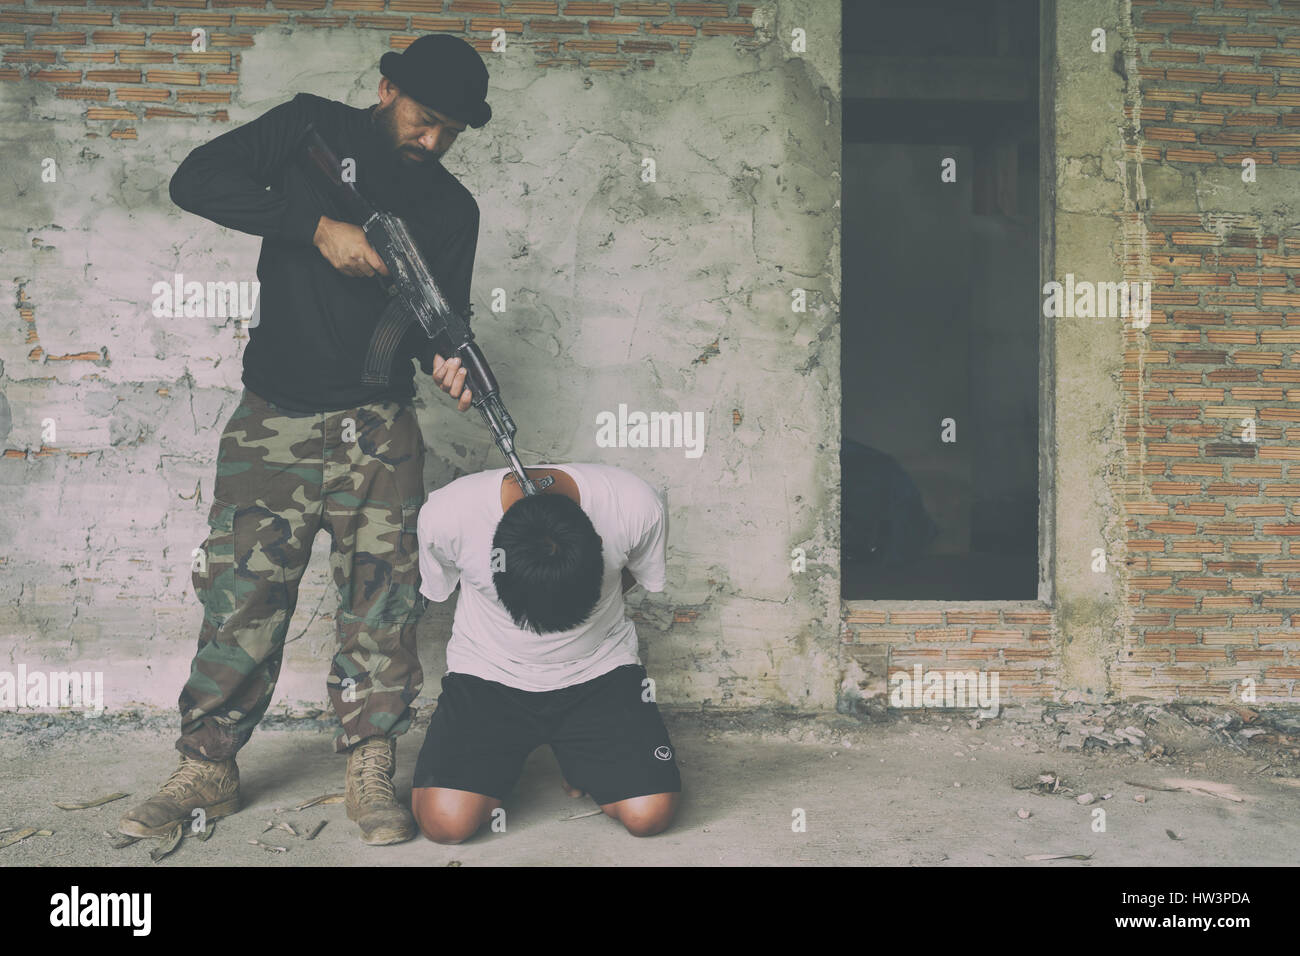 Terrorist in balaclava threatening with gun to man abducted Stock Photo